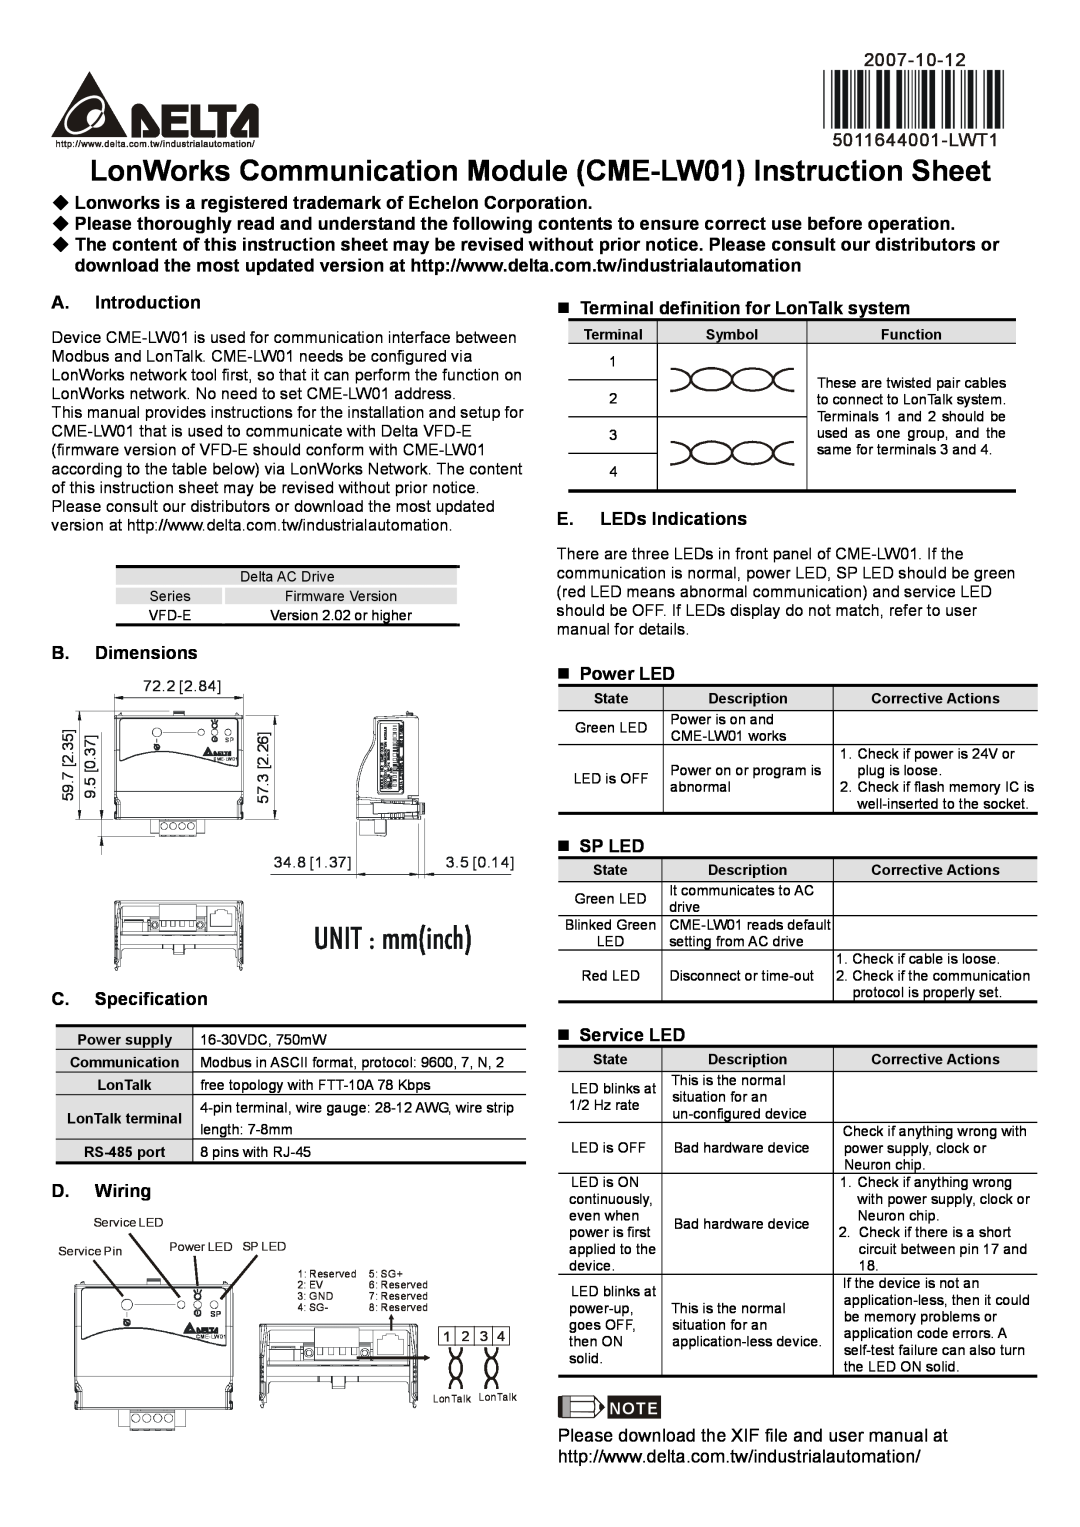 Delta Electronics dimensions LonWorks Communication Module CME-LW01 Instruction Sheet, 2007-10-12 5011644001-LWT1 